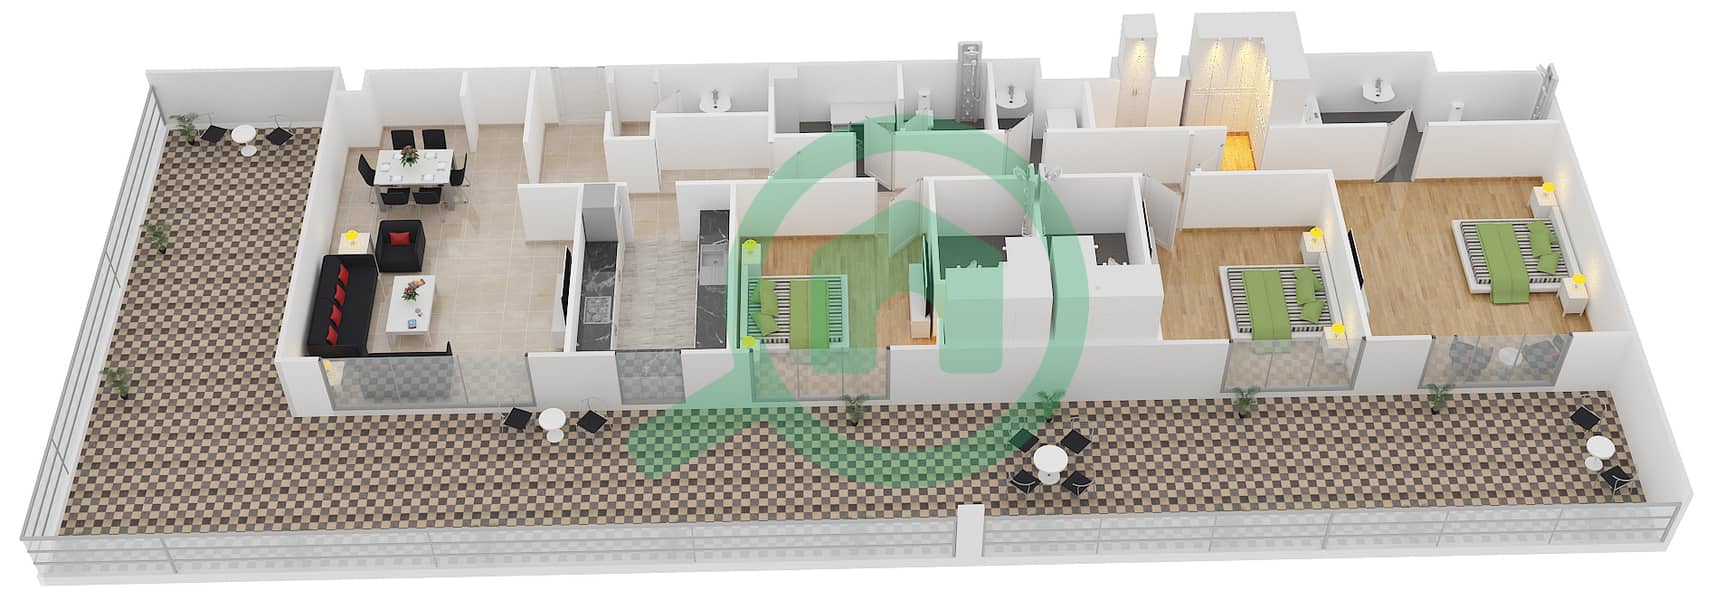 Белгравия - Апартамент 3 Cпальни планировка Тип 5 interactive3D